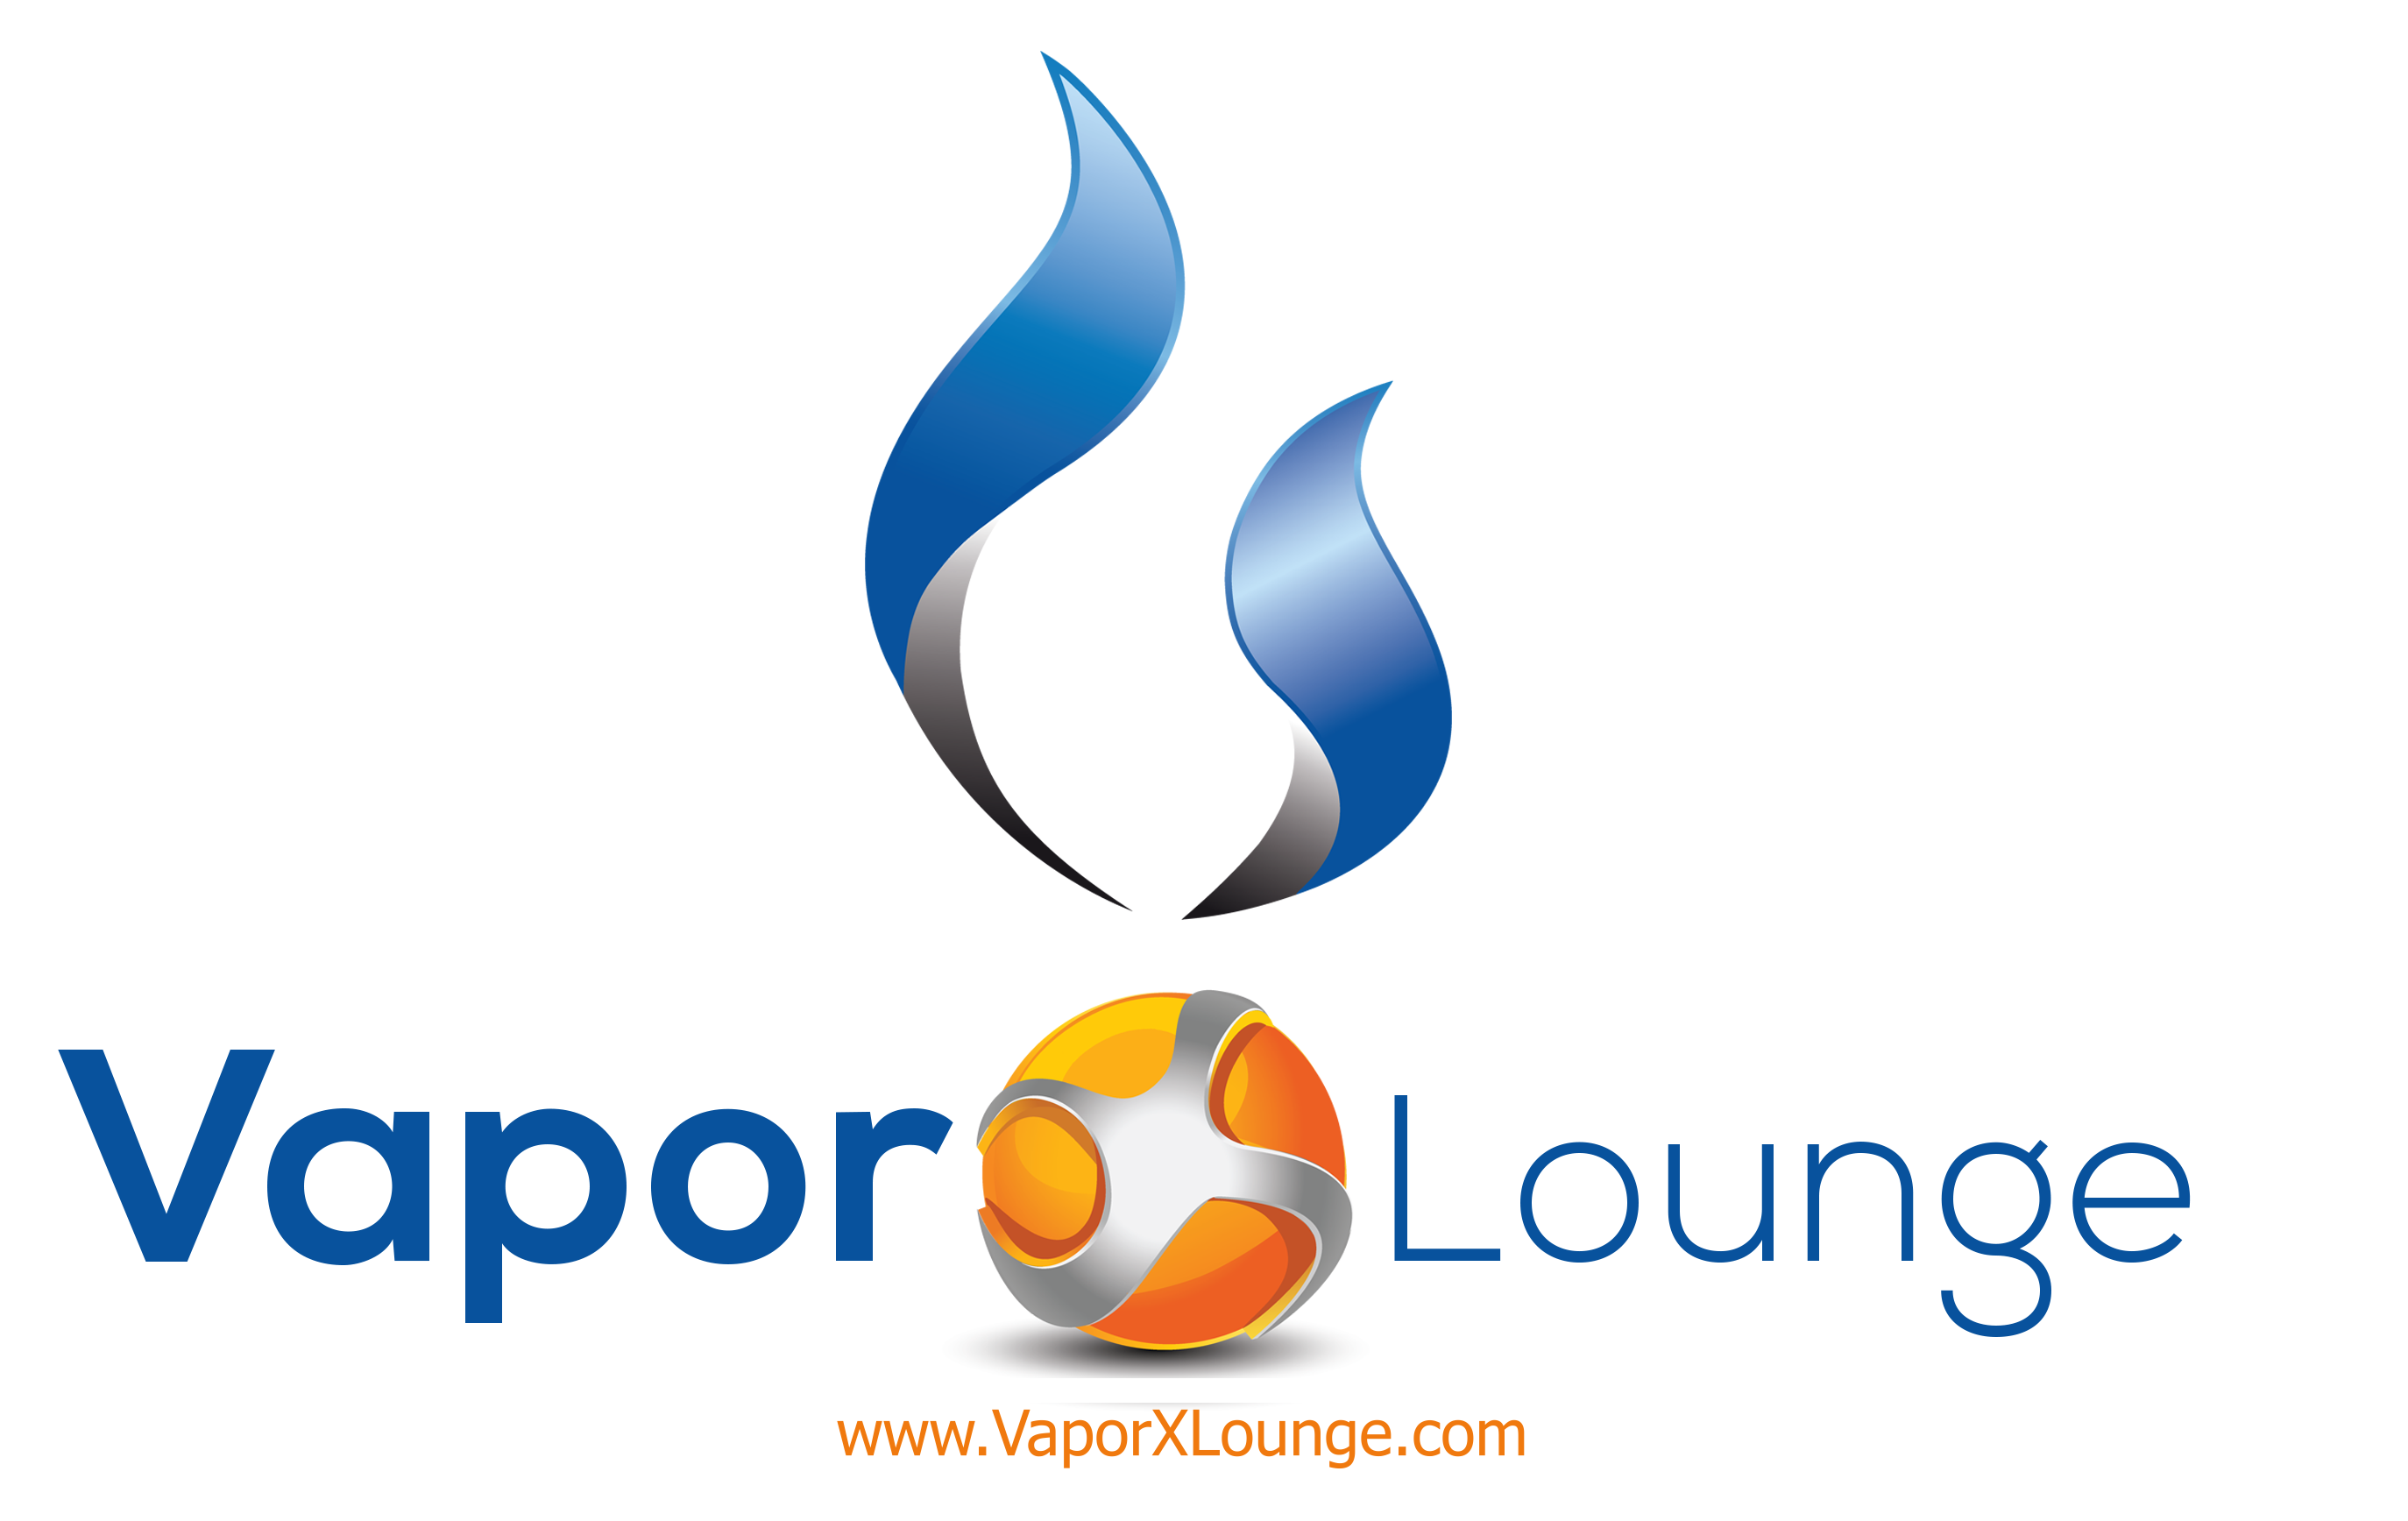 Vapor X Lounge